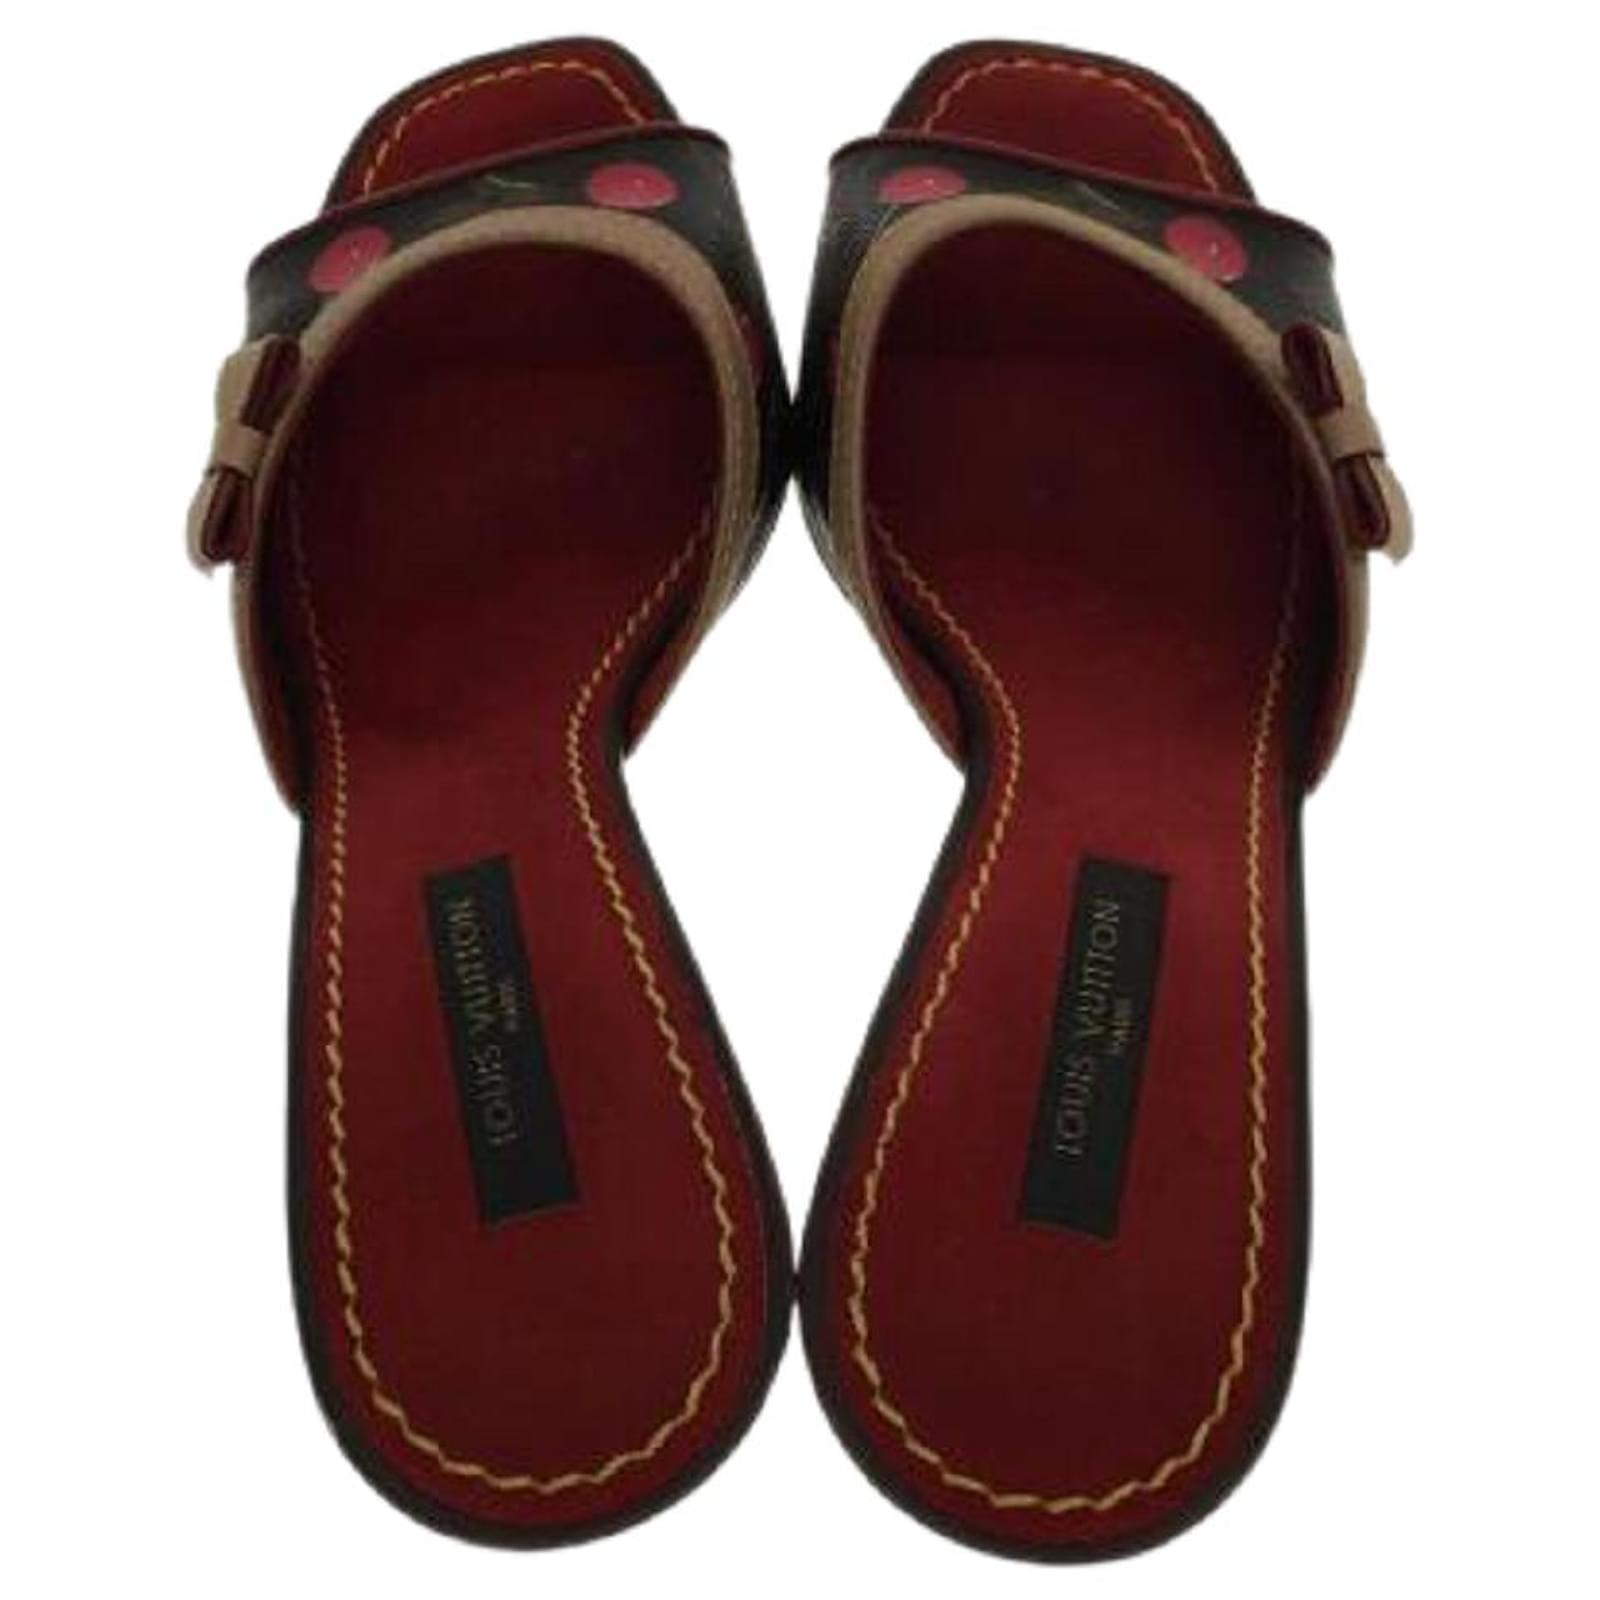 Louis Vuitton Satin Cherry Blossom Monogram Sandal Shoes Size 35.0 UK or  5.0 US